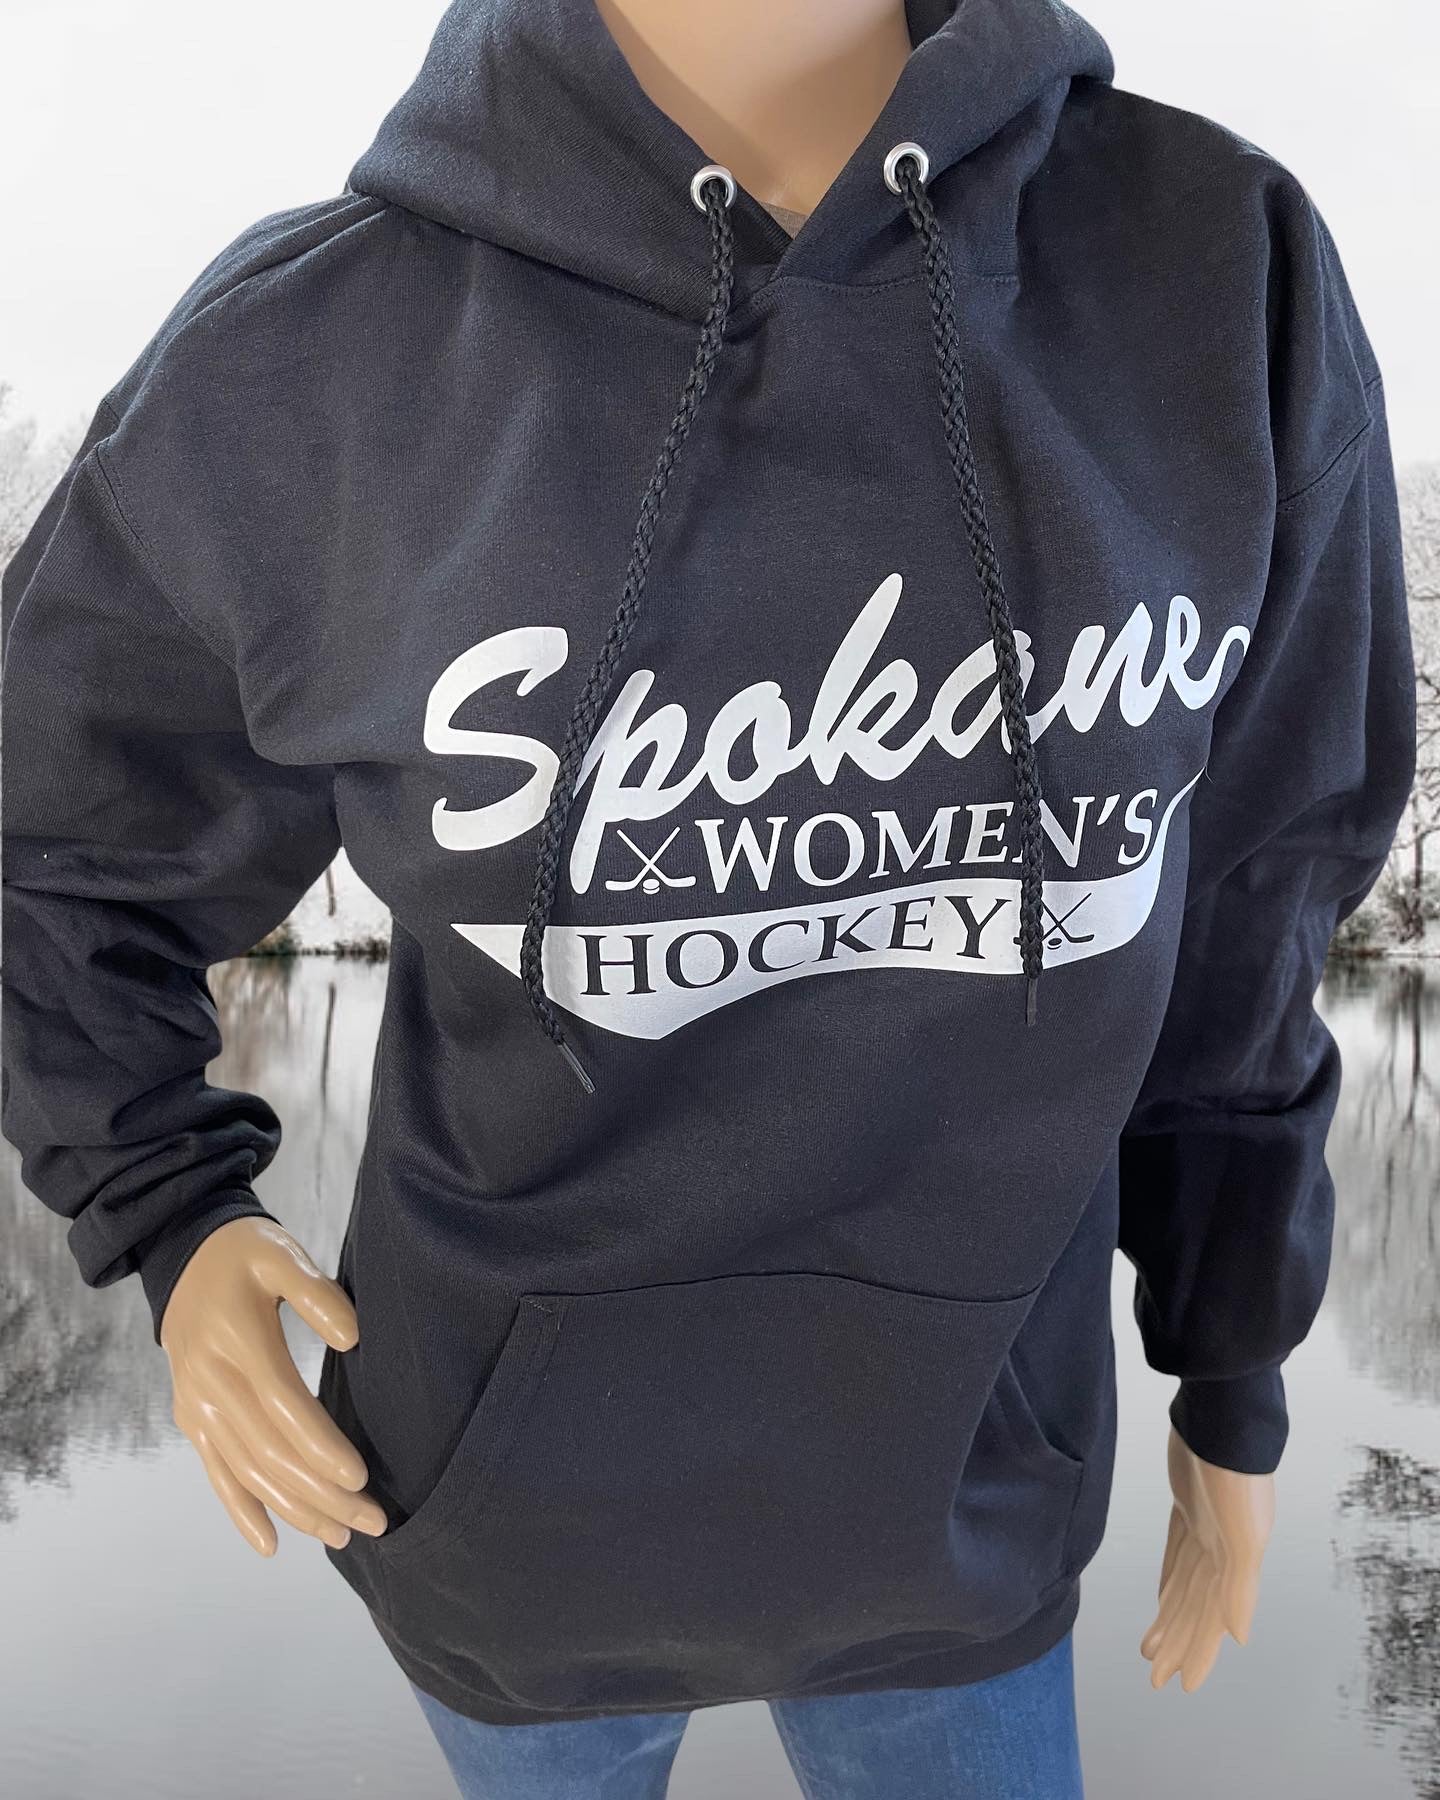 Spokane women’s hockey sweatshirt